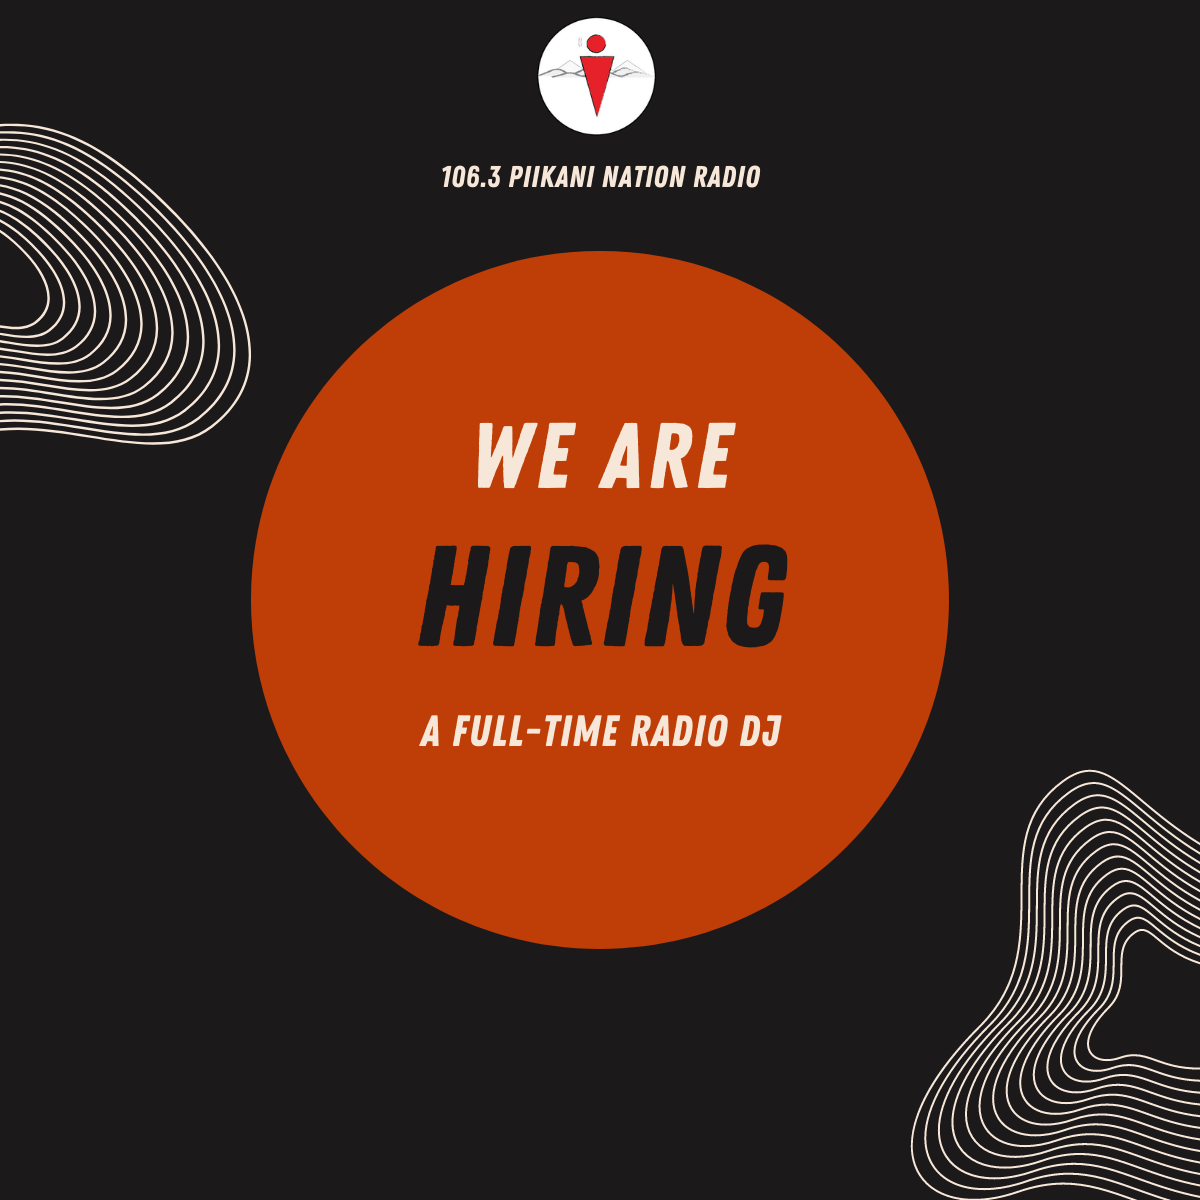 106.3 hiring poster – 2022 (1)